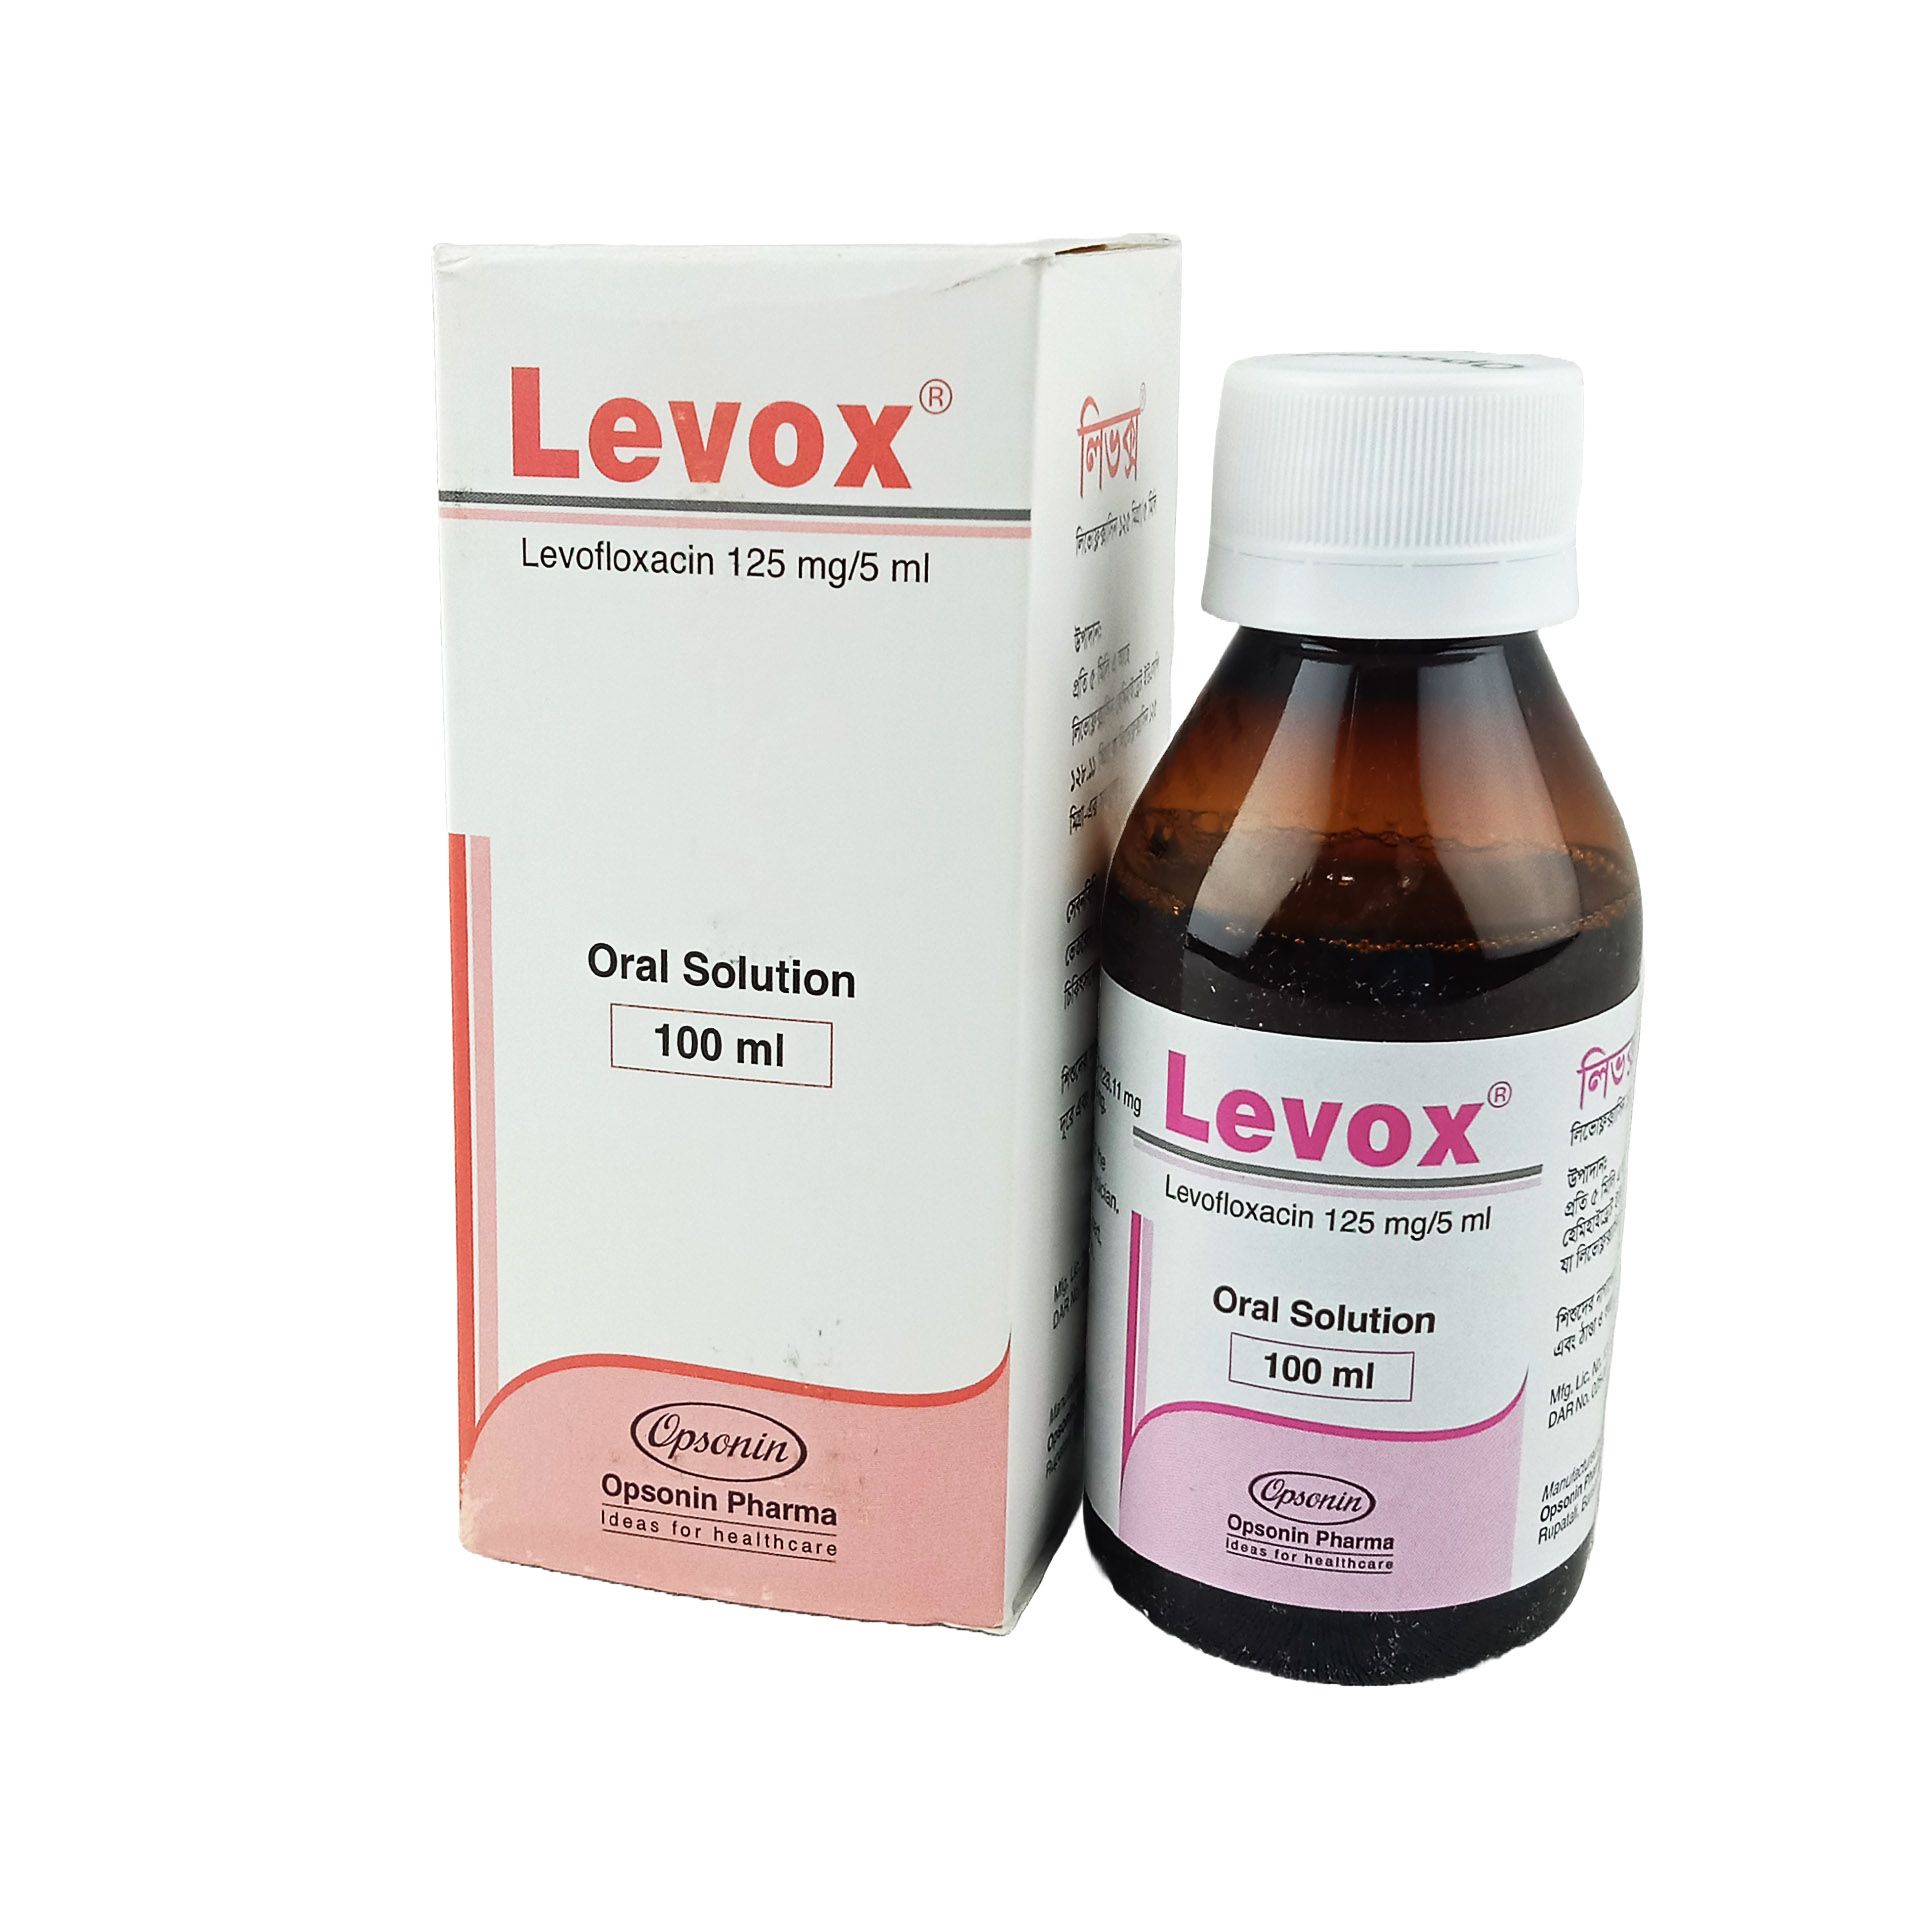 Levox 125mg/5ml Oral Solution